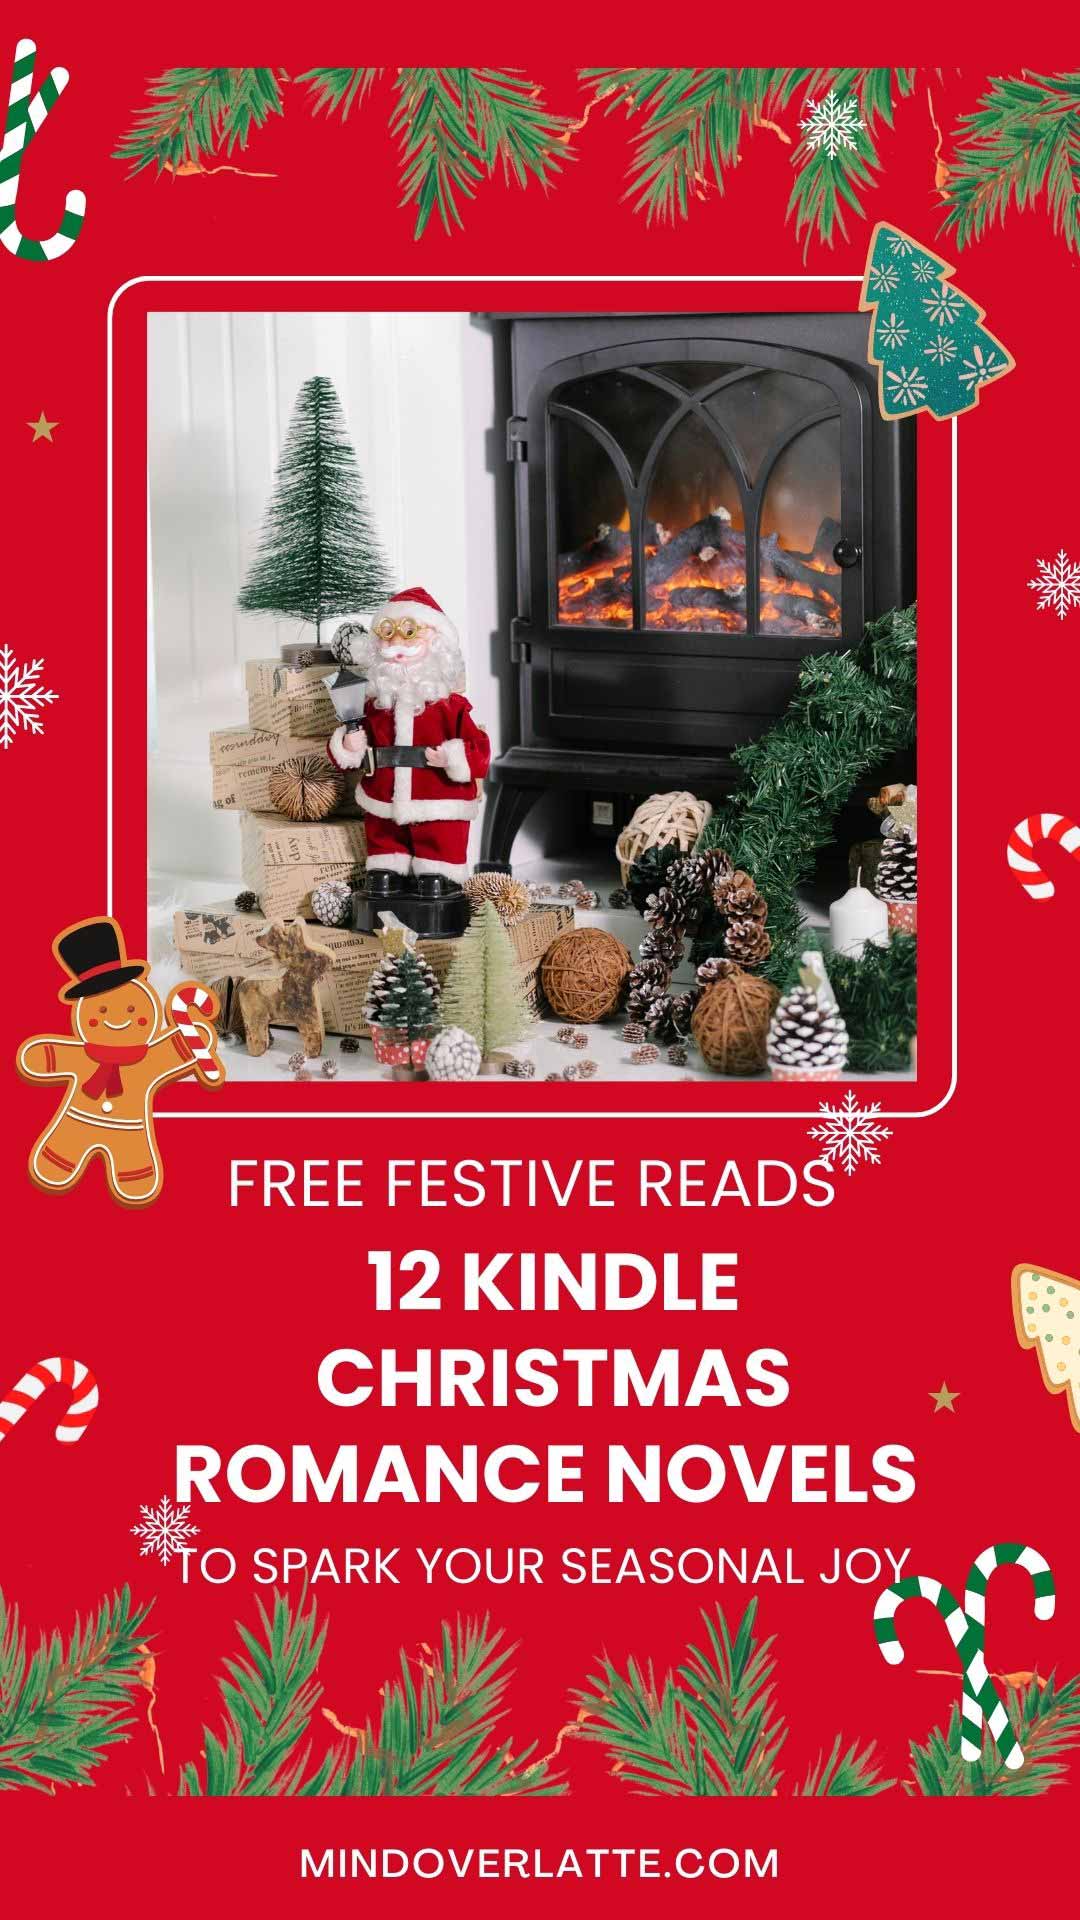 4-Kindle Christmas Romance Novels